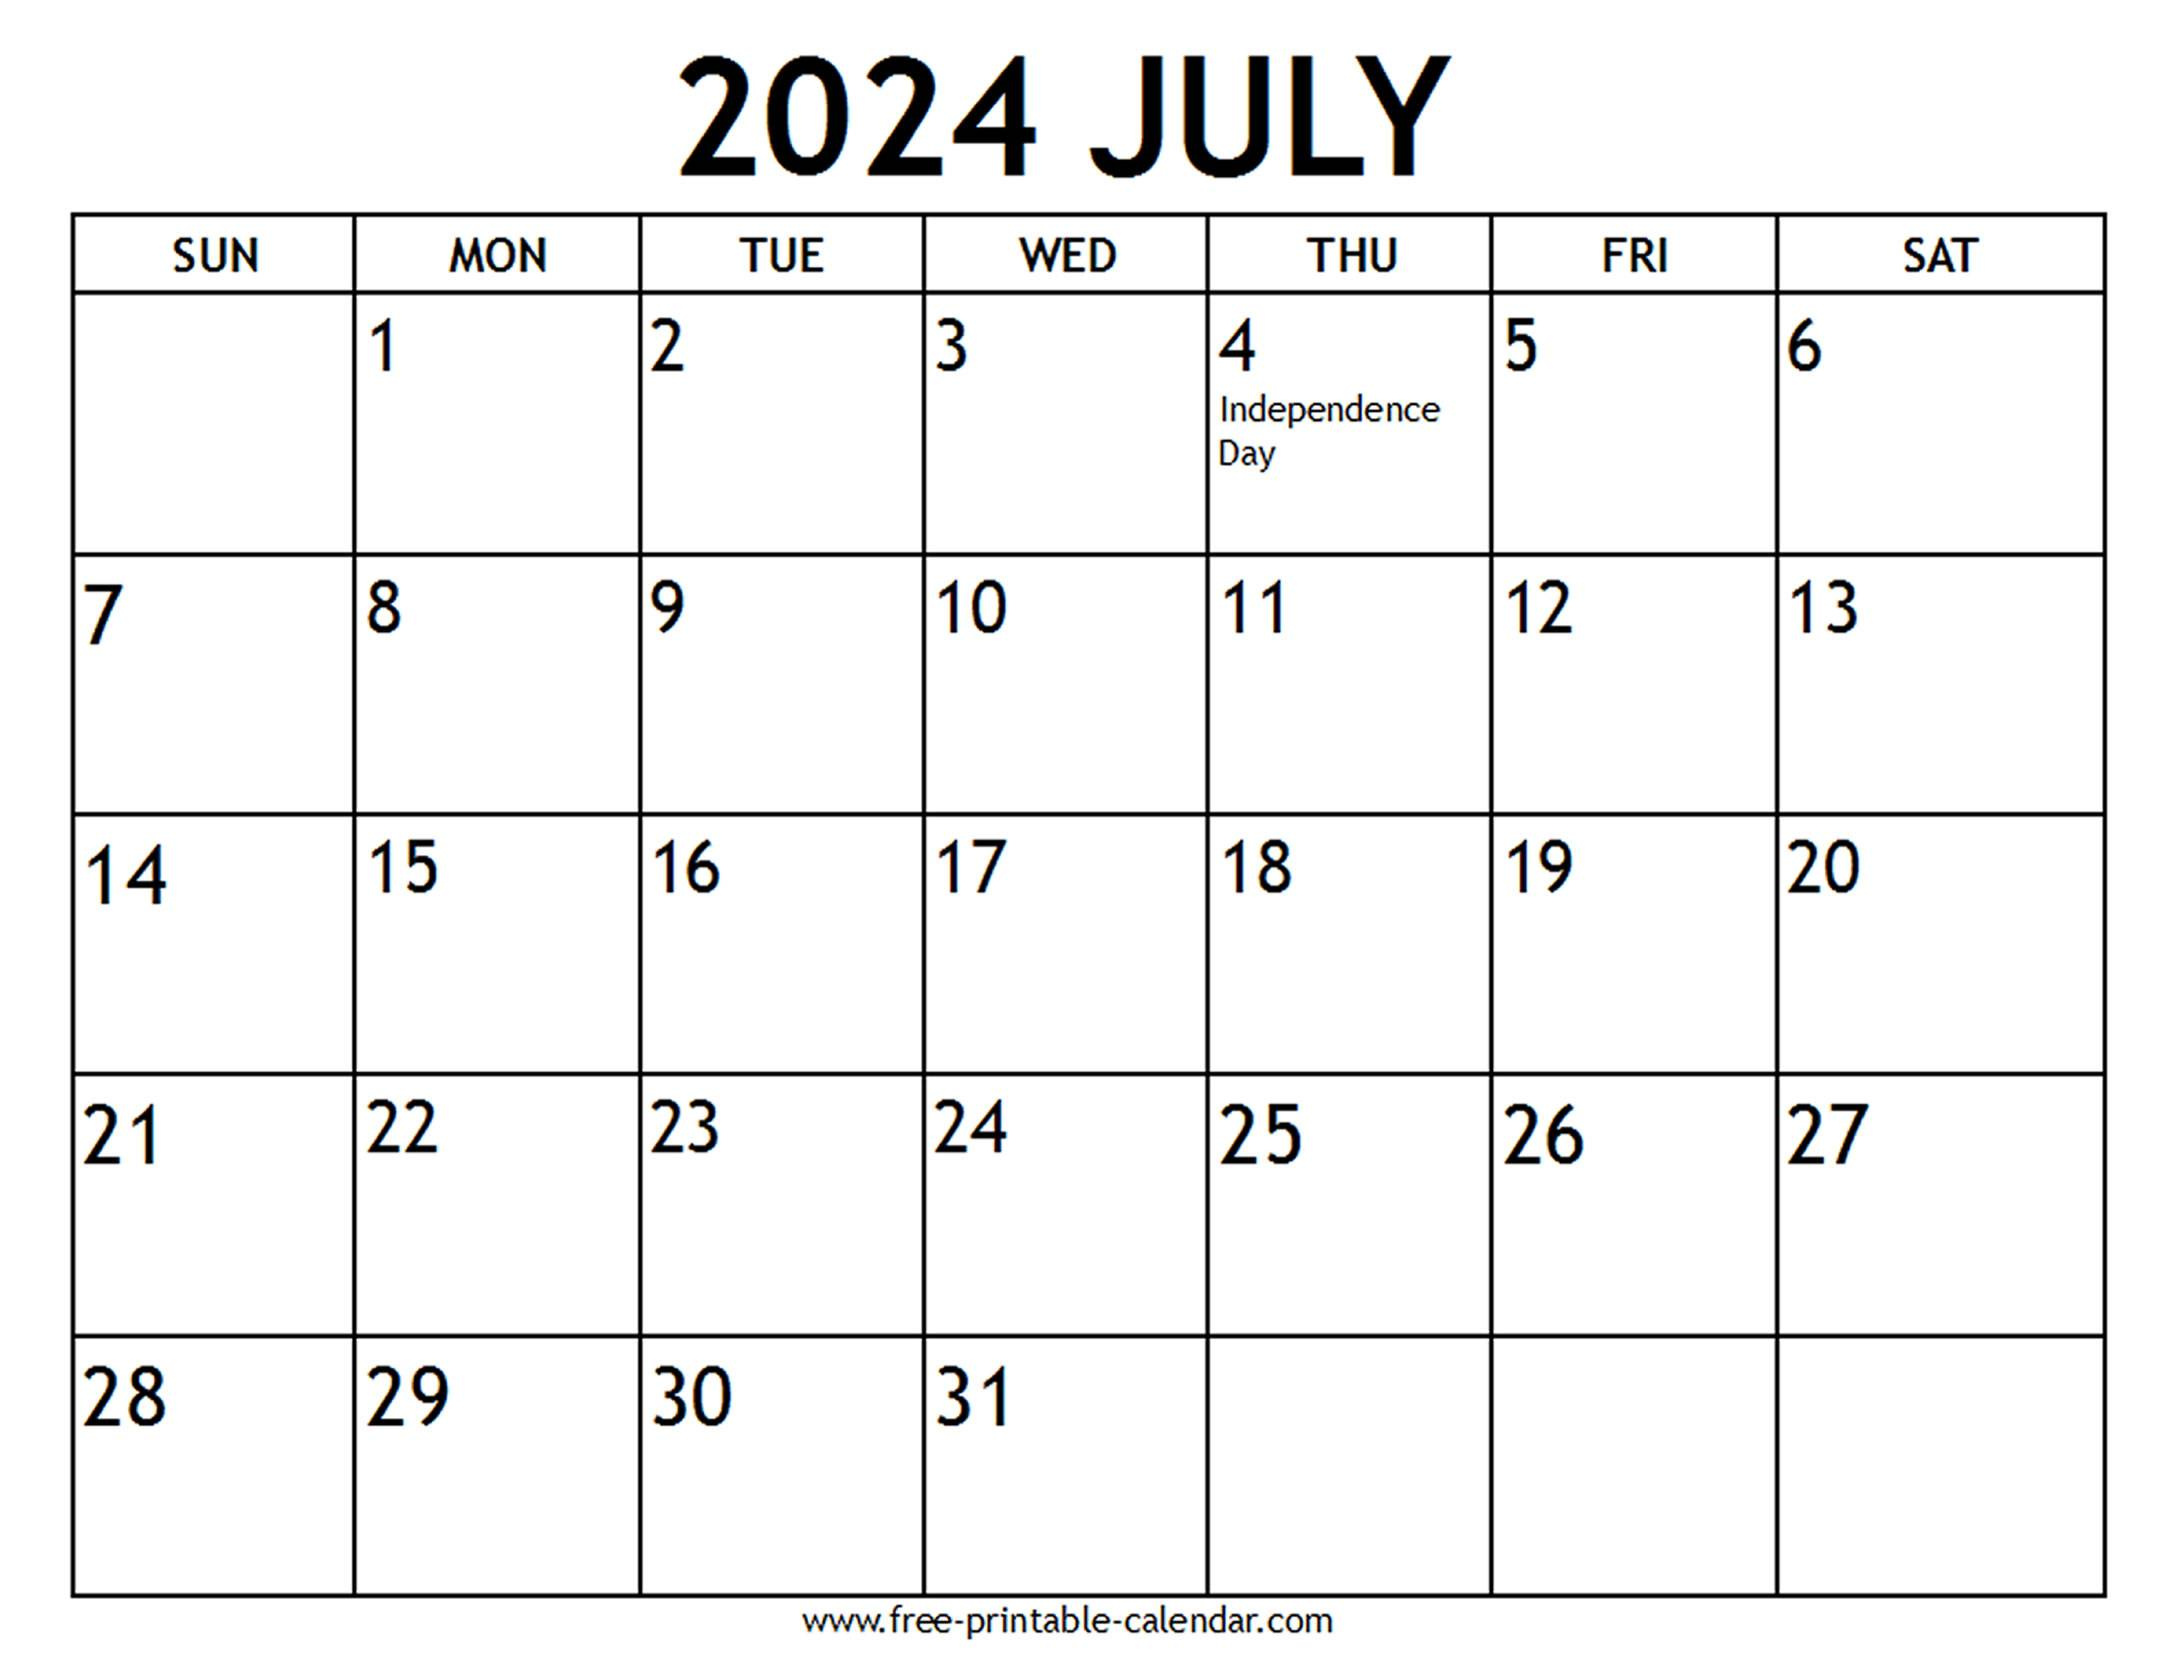 July 2024 Calendar Us Holidays - Free-Printable-Calendar inside July Calendar 2024 With Holidays